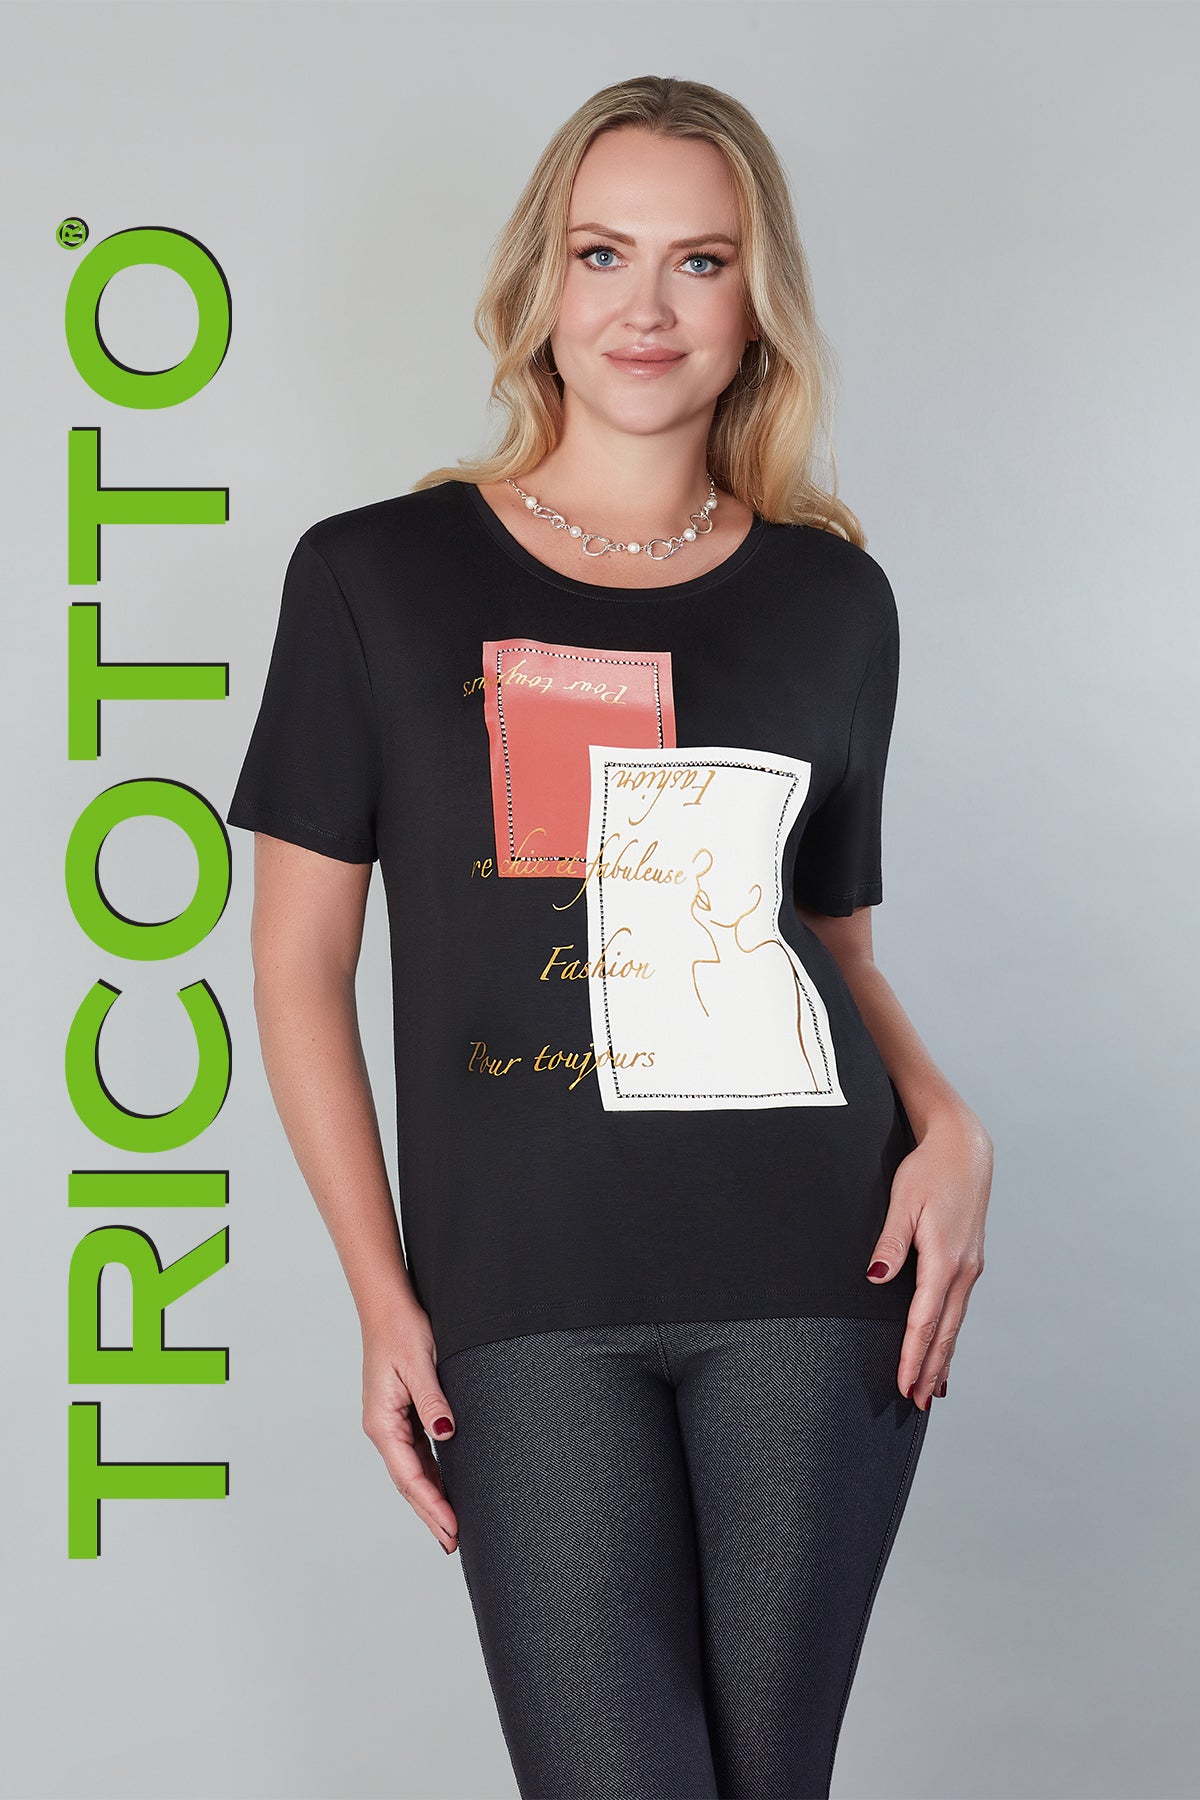 Tricotto Pour Toujours T-shirt-Tricotto Fashion Black Coral T-shirt